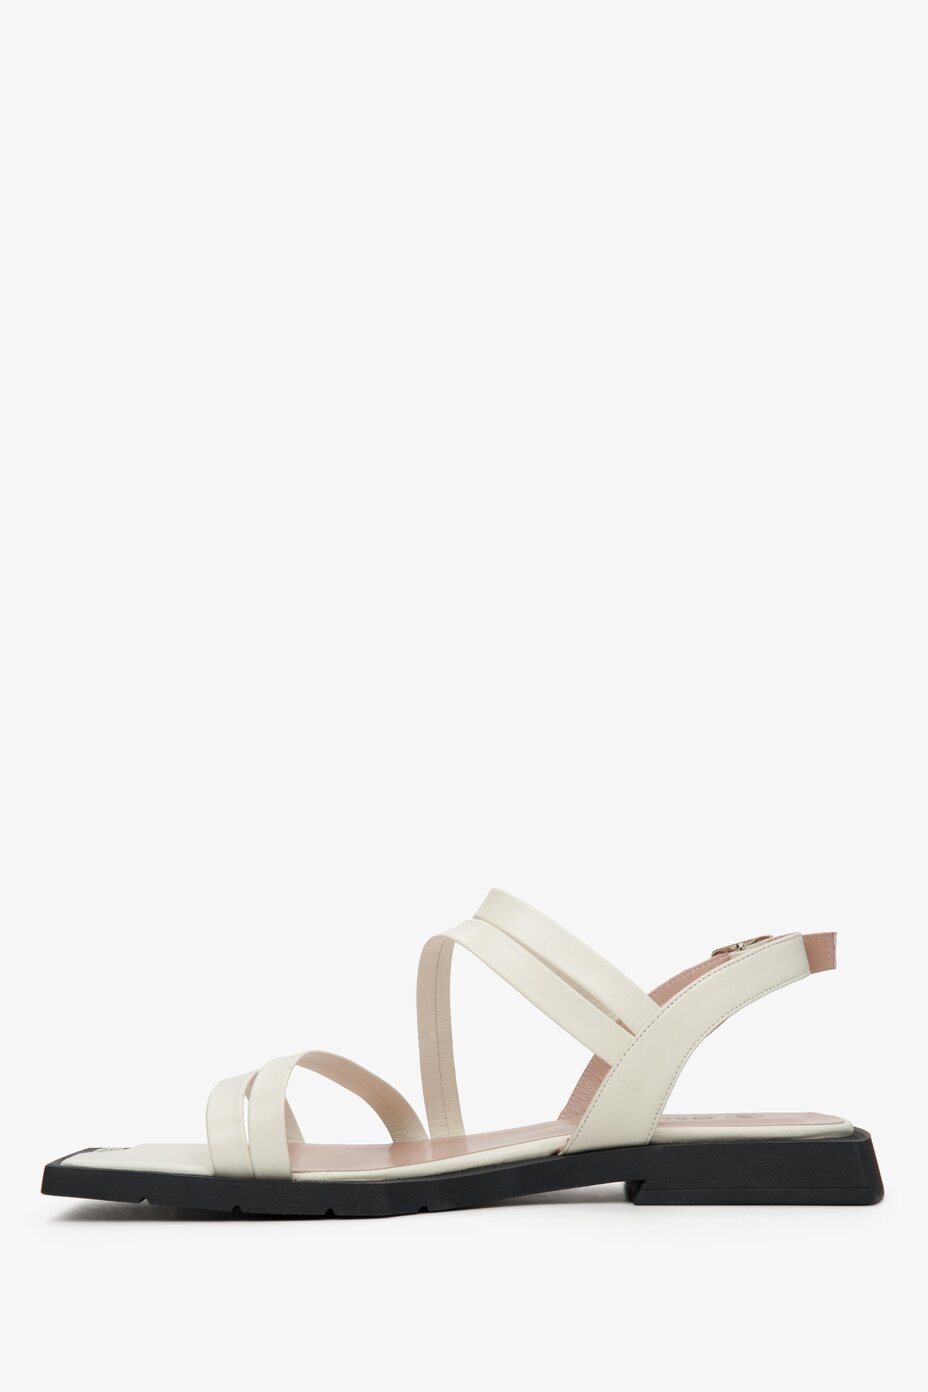 Women's summer sandals with thin straps: Estro brand, color white.